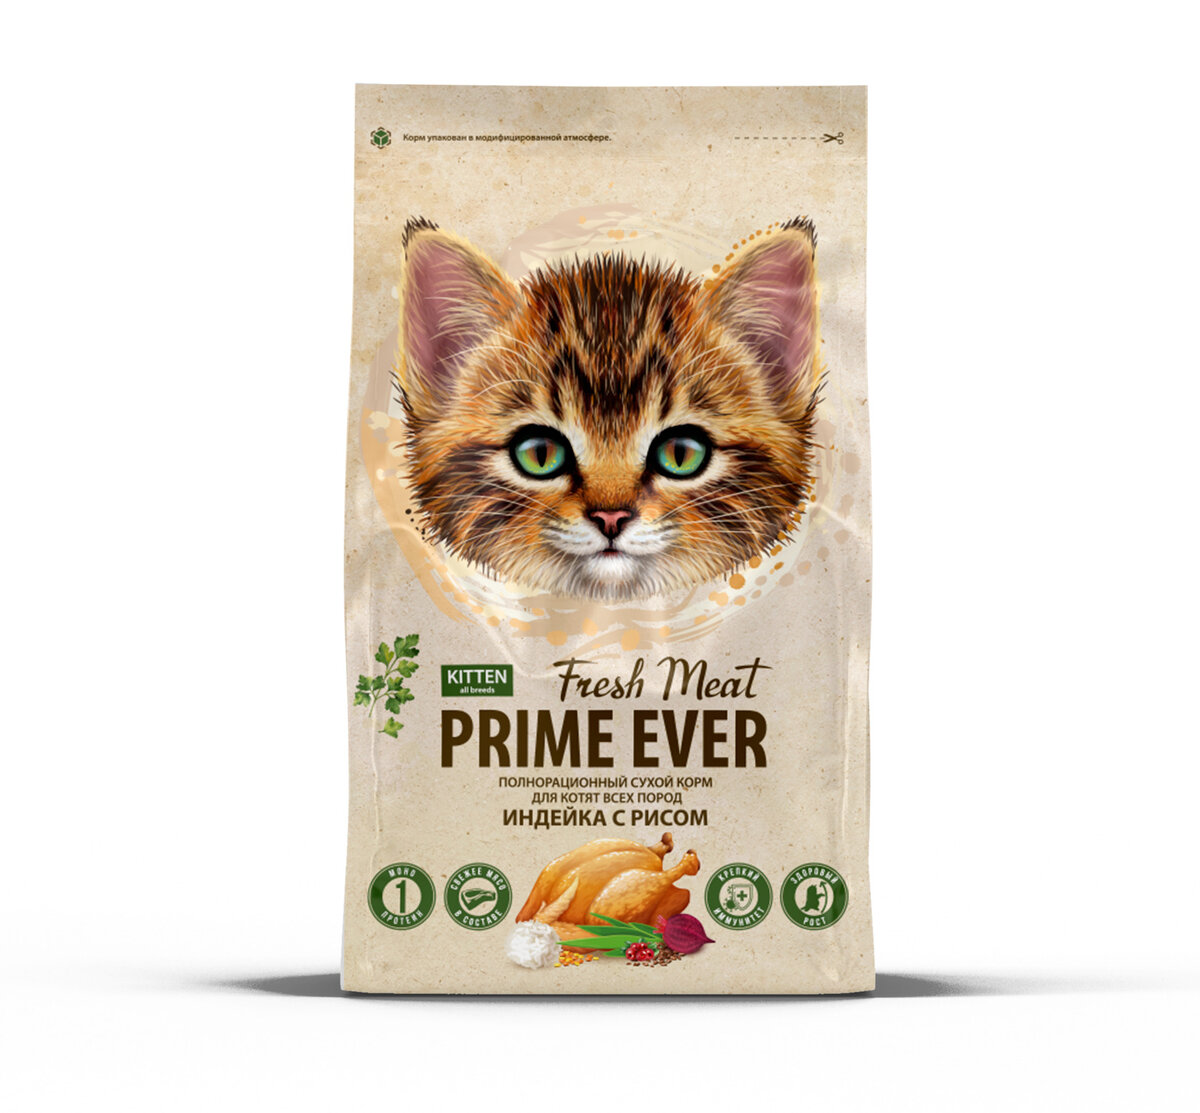  Prime Ever Fresh Meat для котят - корм с содержанием свежего мяса. 